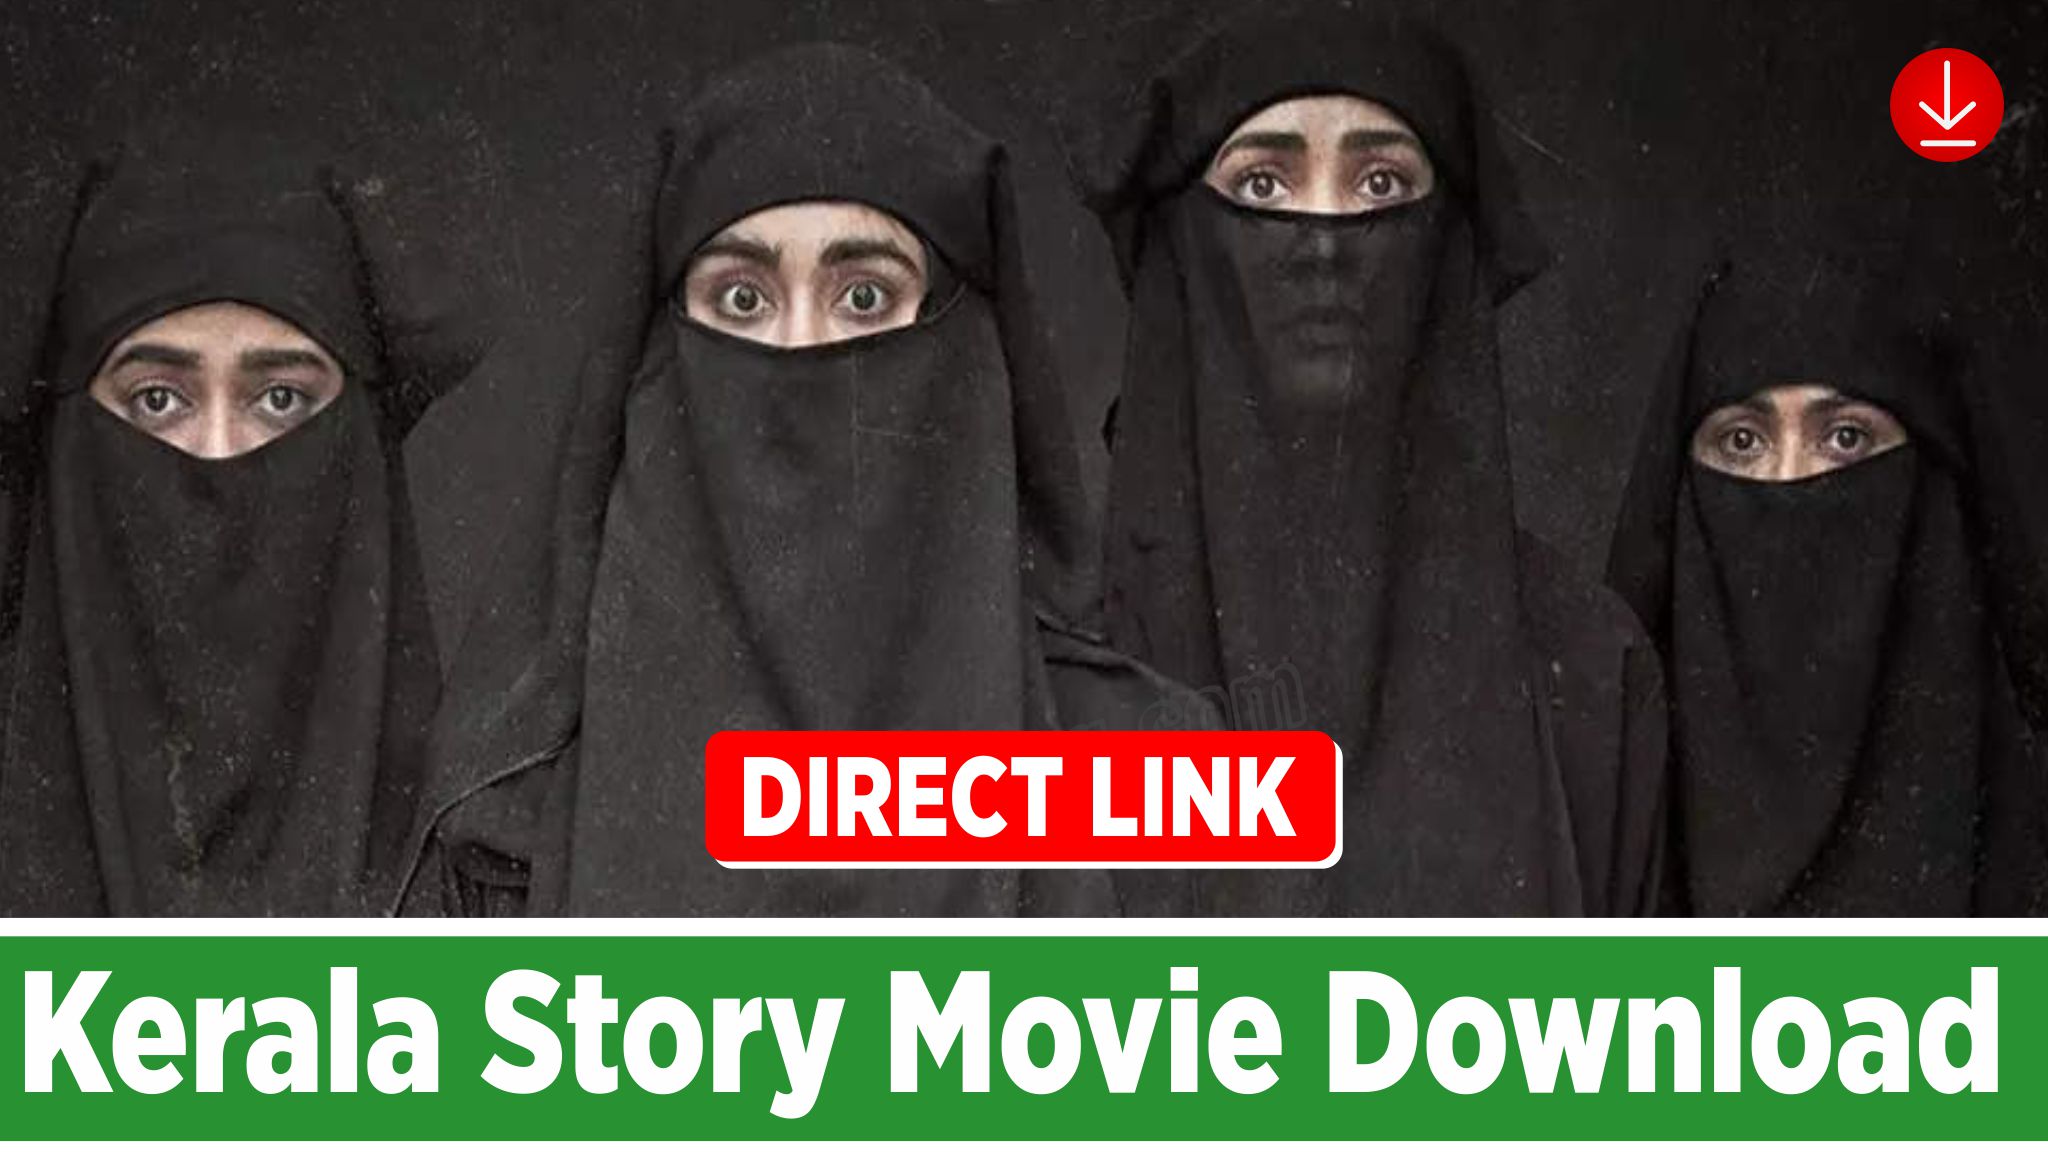 Kerala Story Movie Download,